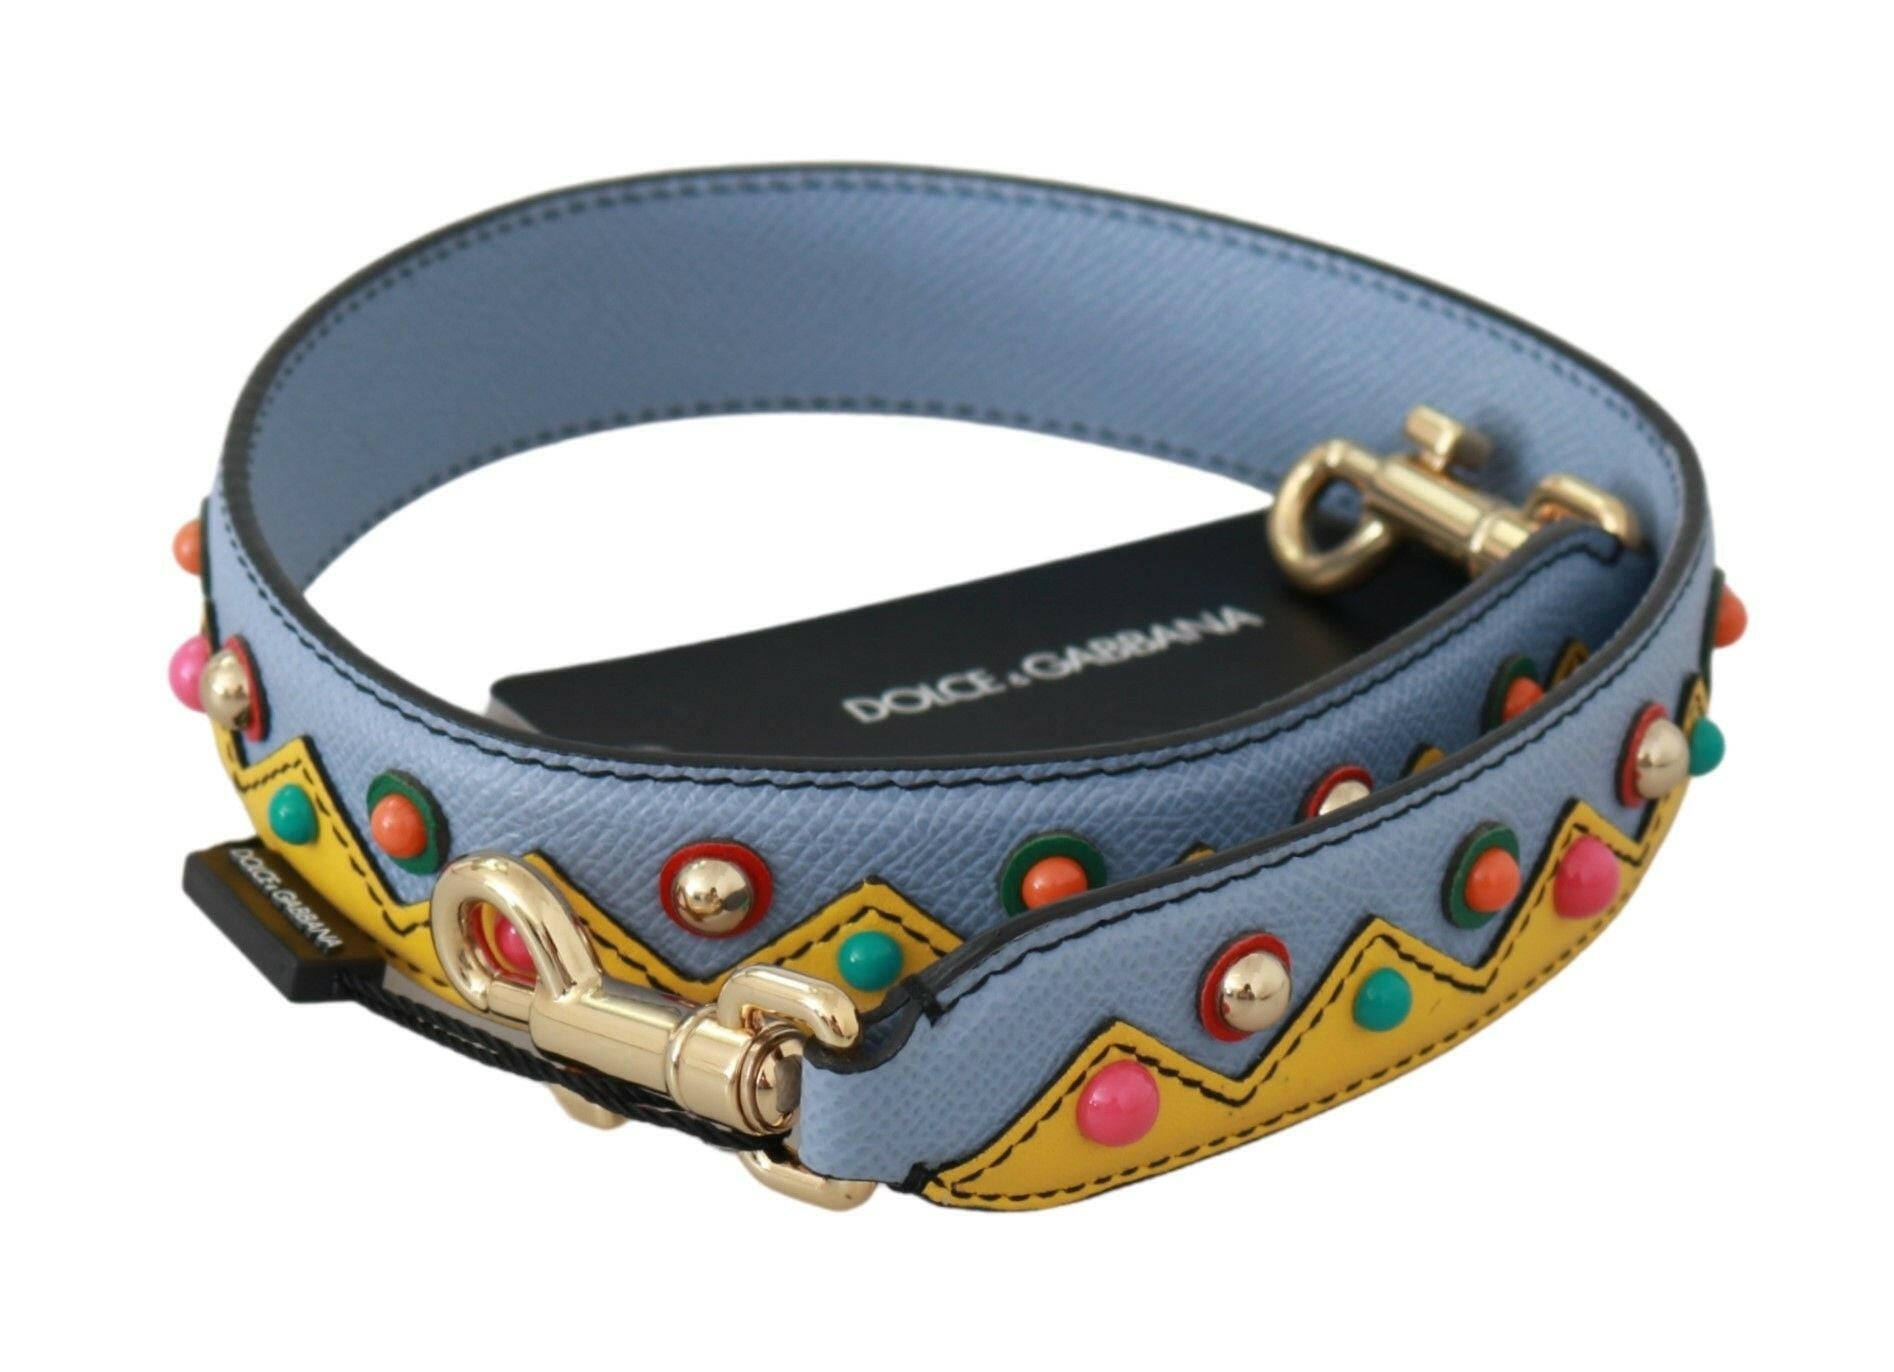 Dolce & Gabbana Blue Handbag Accessory Shoulder Strap Leather - GENUINE AUTHENTIC BRAND LLC  